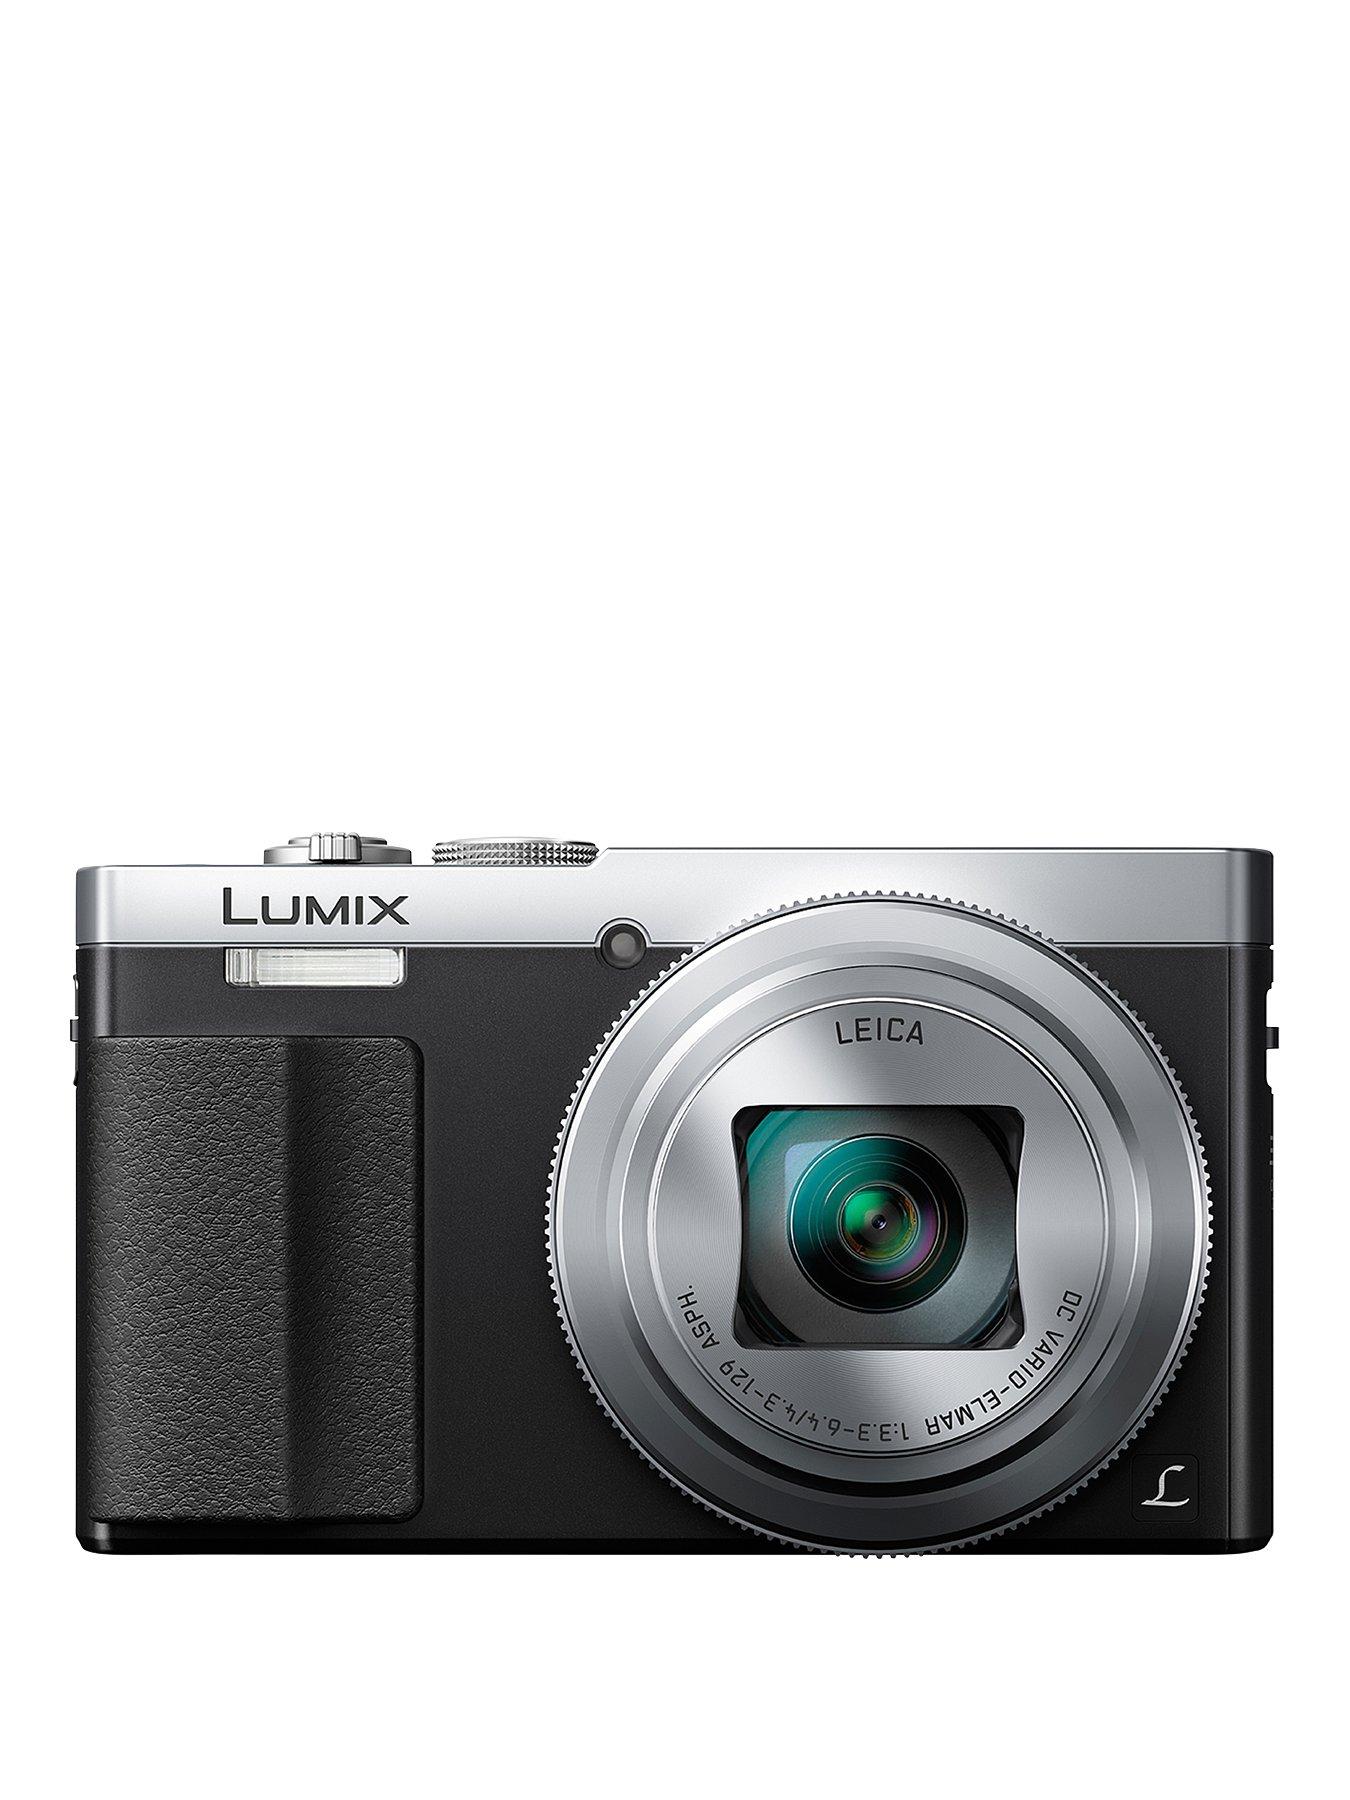 Panasonic Lumix Dmc-Tz70 In Silver – 12.1Mp, 30X Zoom, Wifi, View Finder.